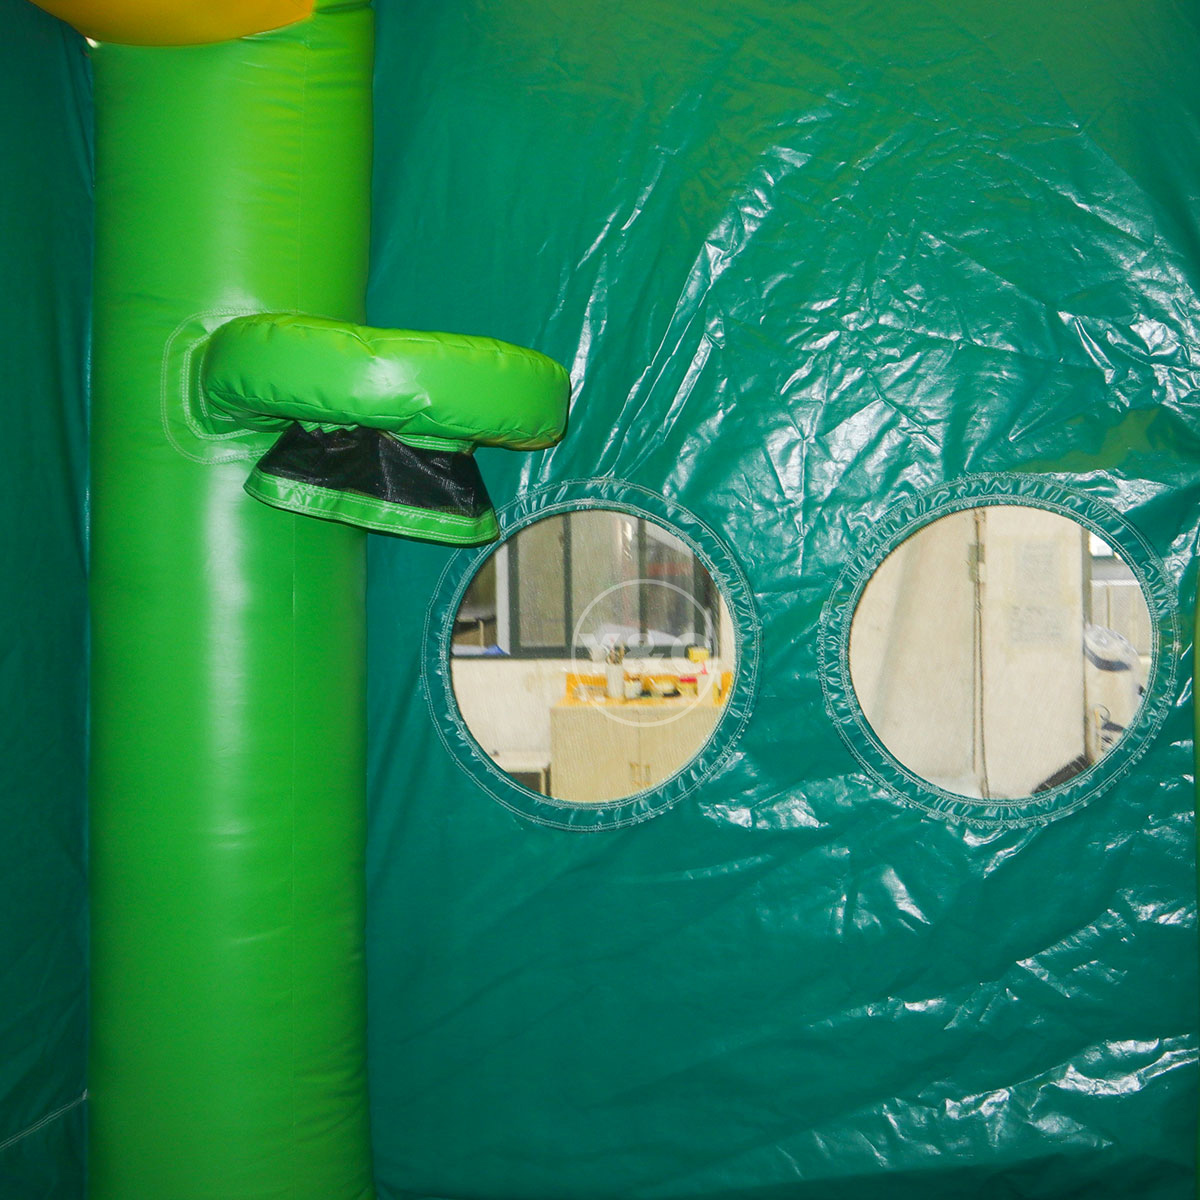 Inflatable Dino Bounce HouseYG-142